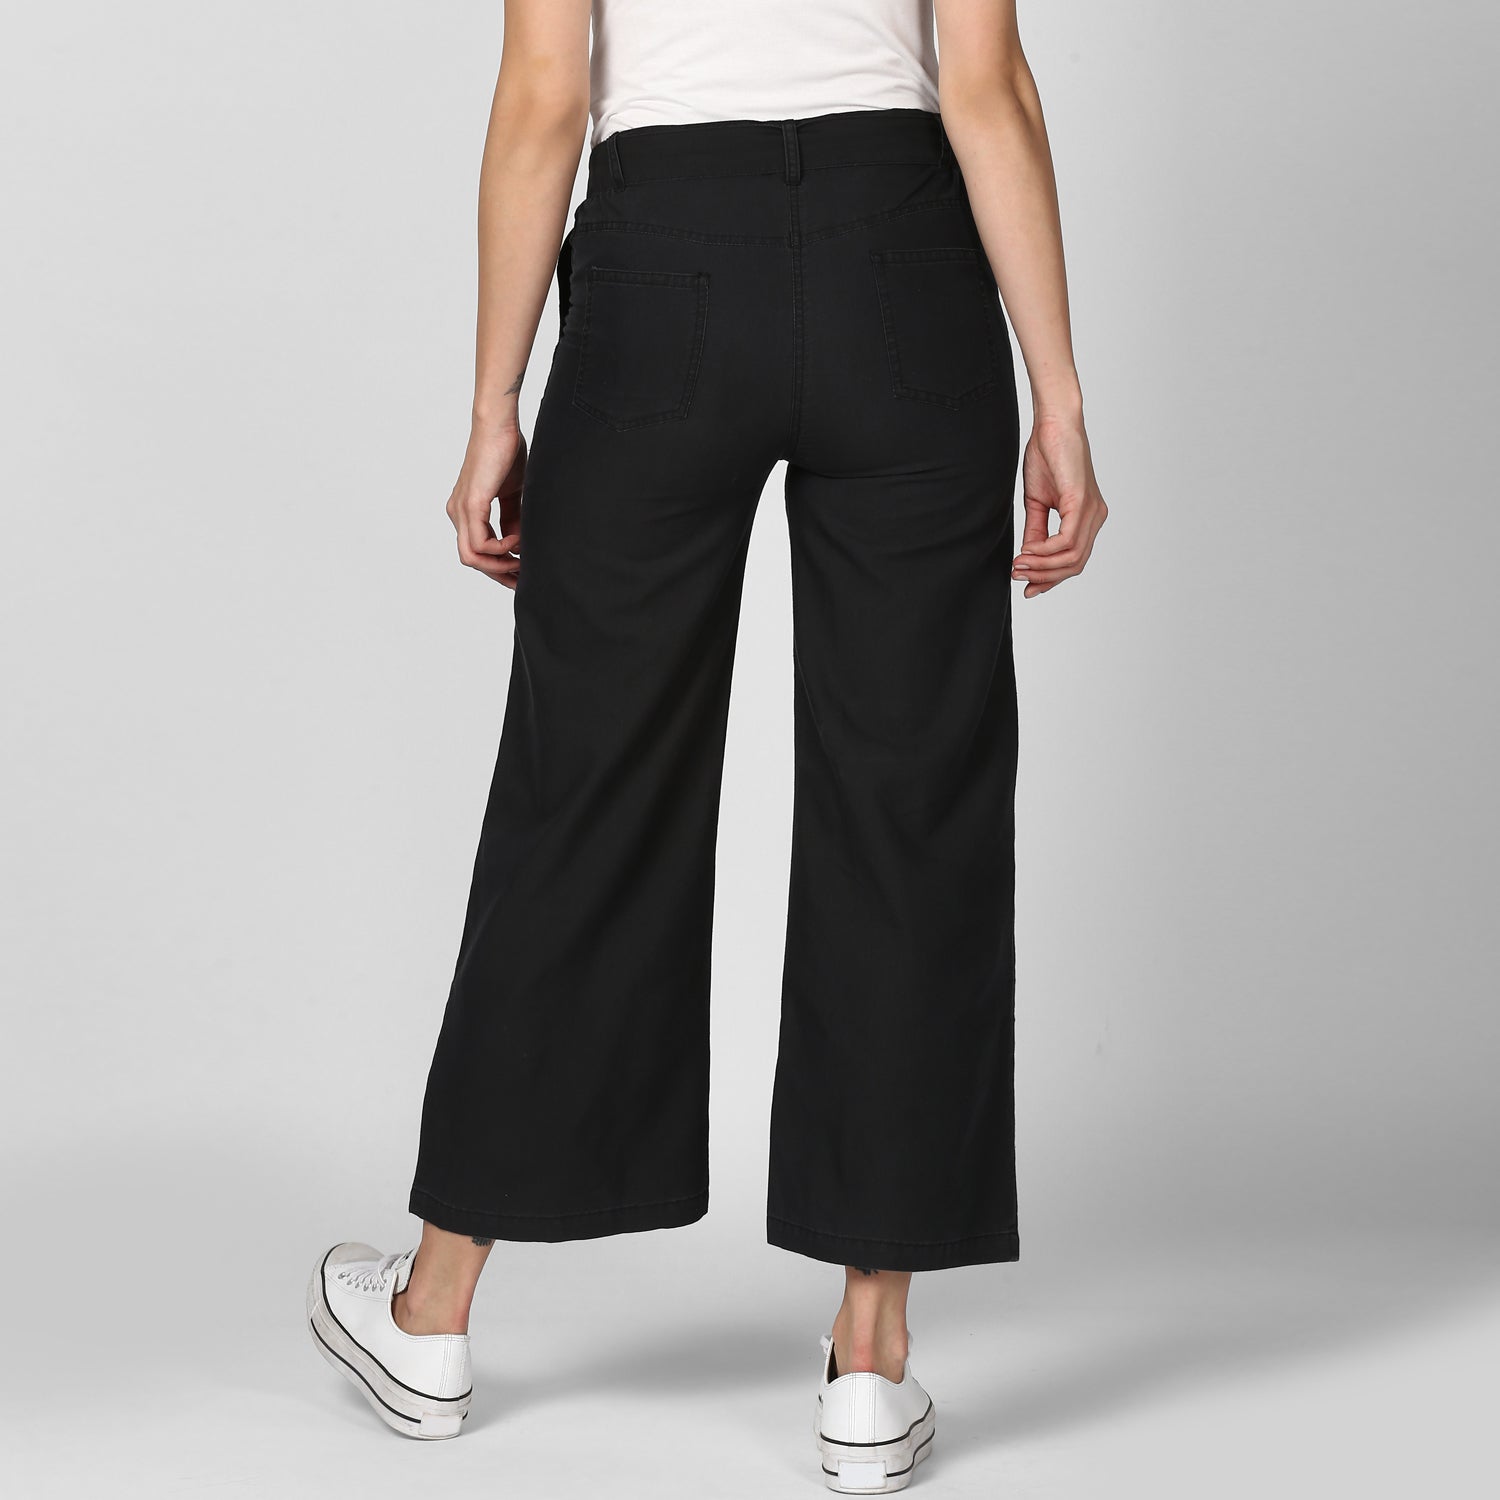 Women's Black Denim Trousers with belt - StyleStone